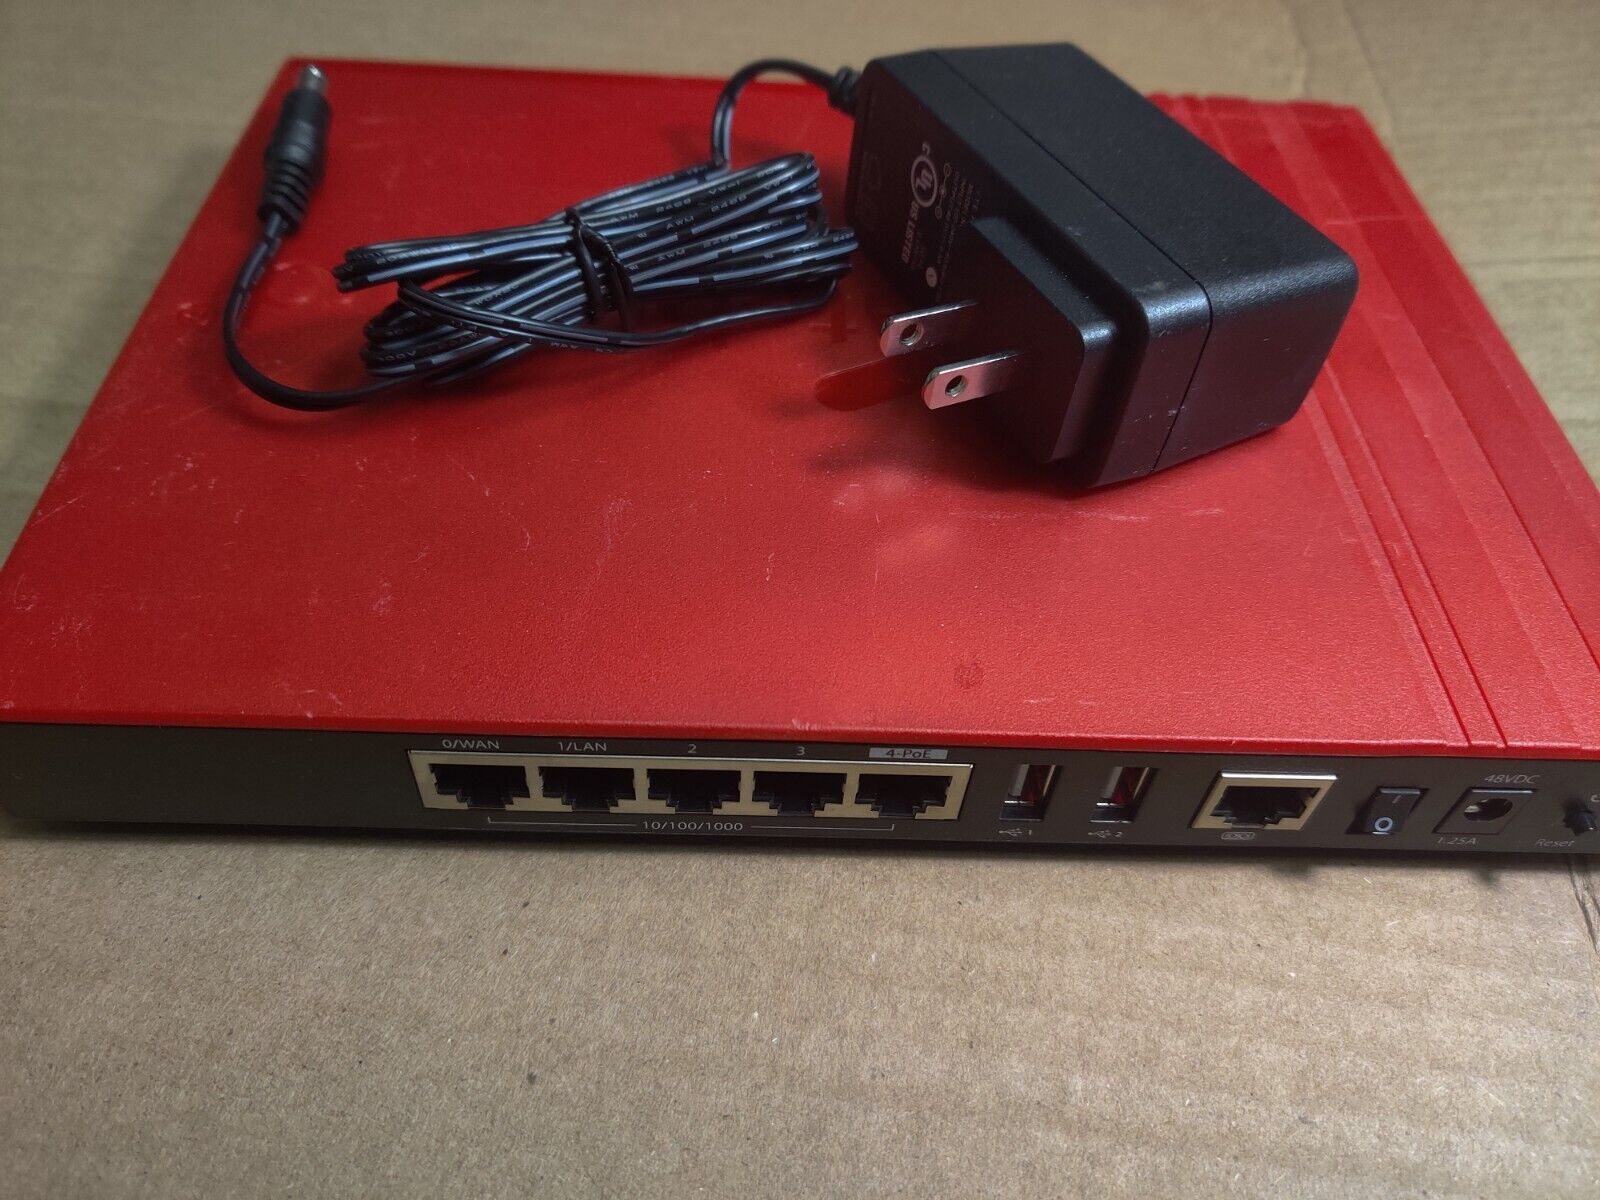 WatchGuard BS3AE5W Firebox T30-W Network Security Firewall w/ Power Adapter